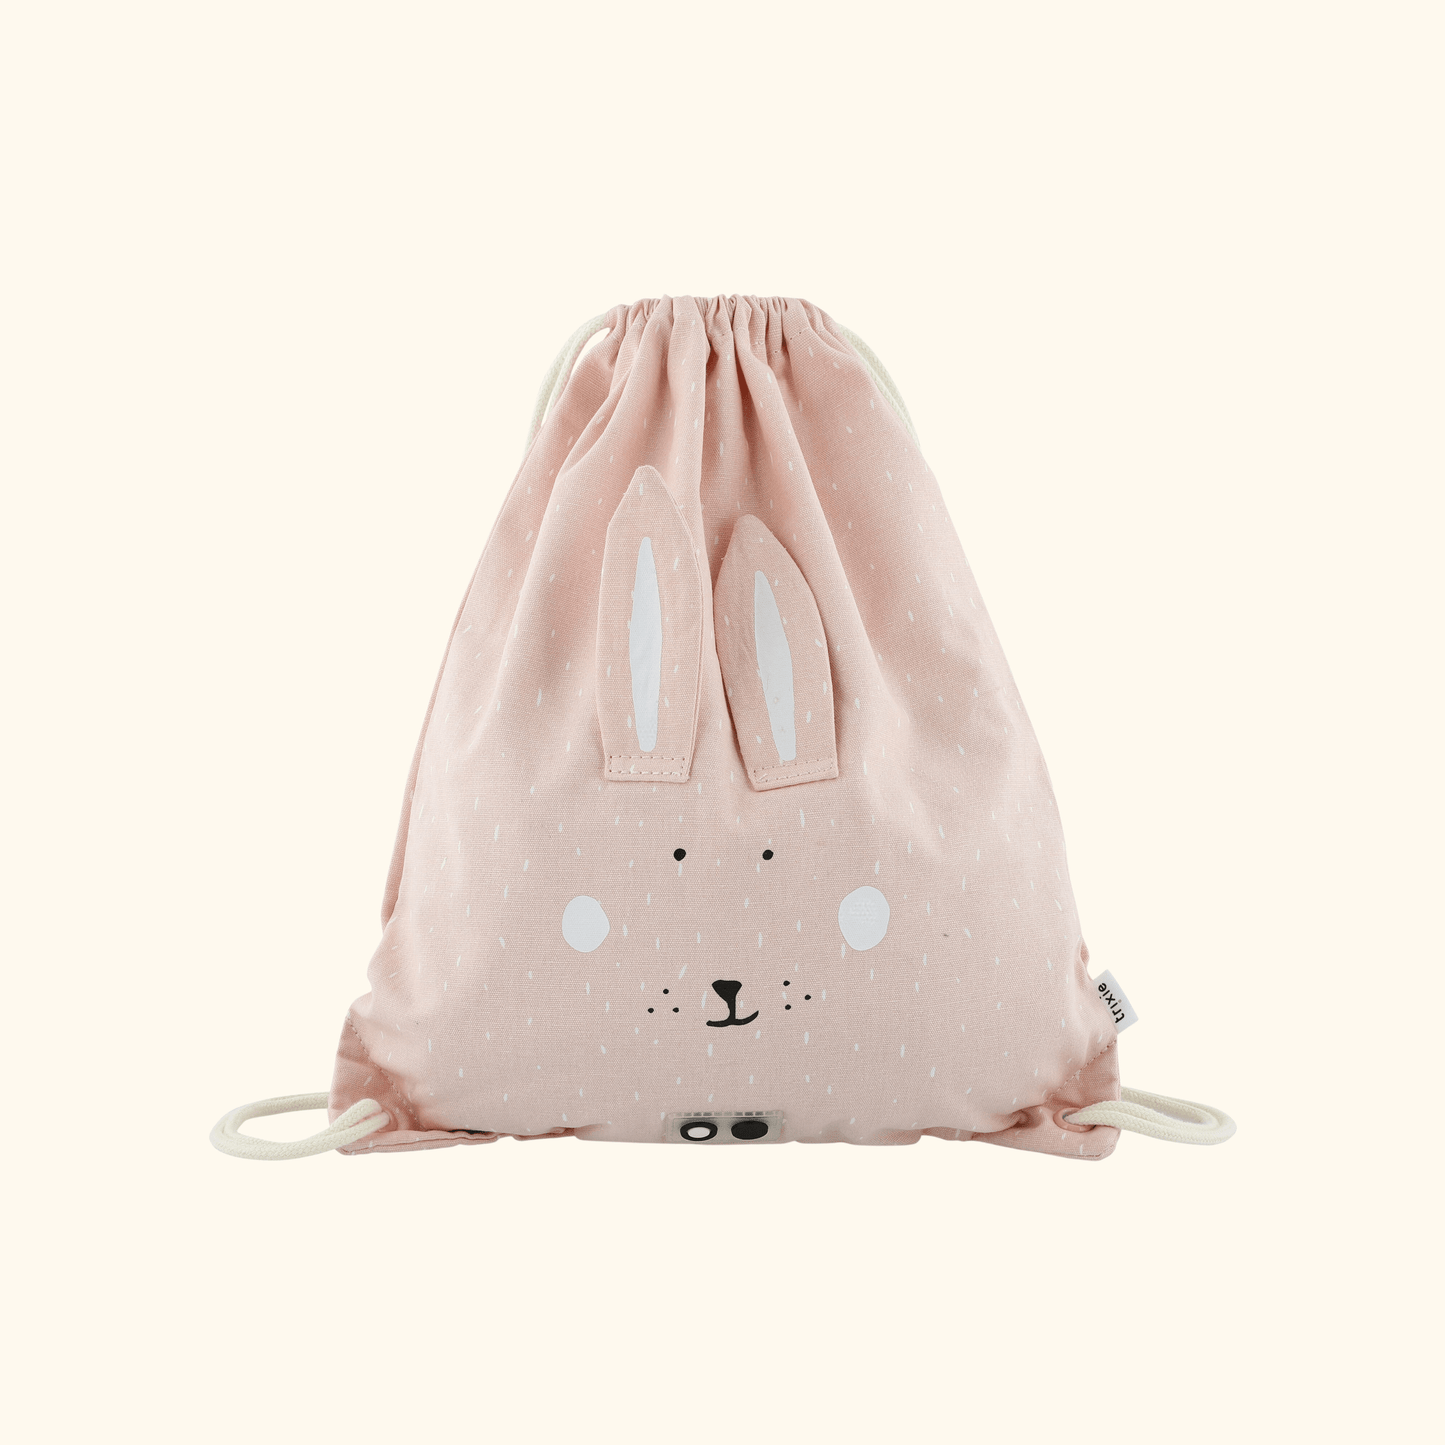 Trixie Drawstring Bag - Mrs. Rabbit